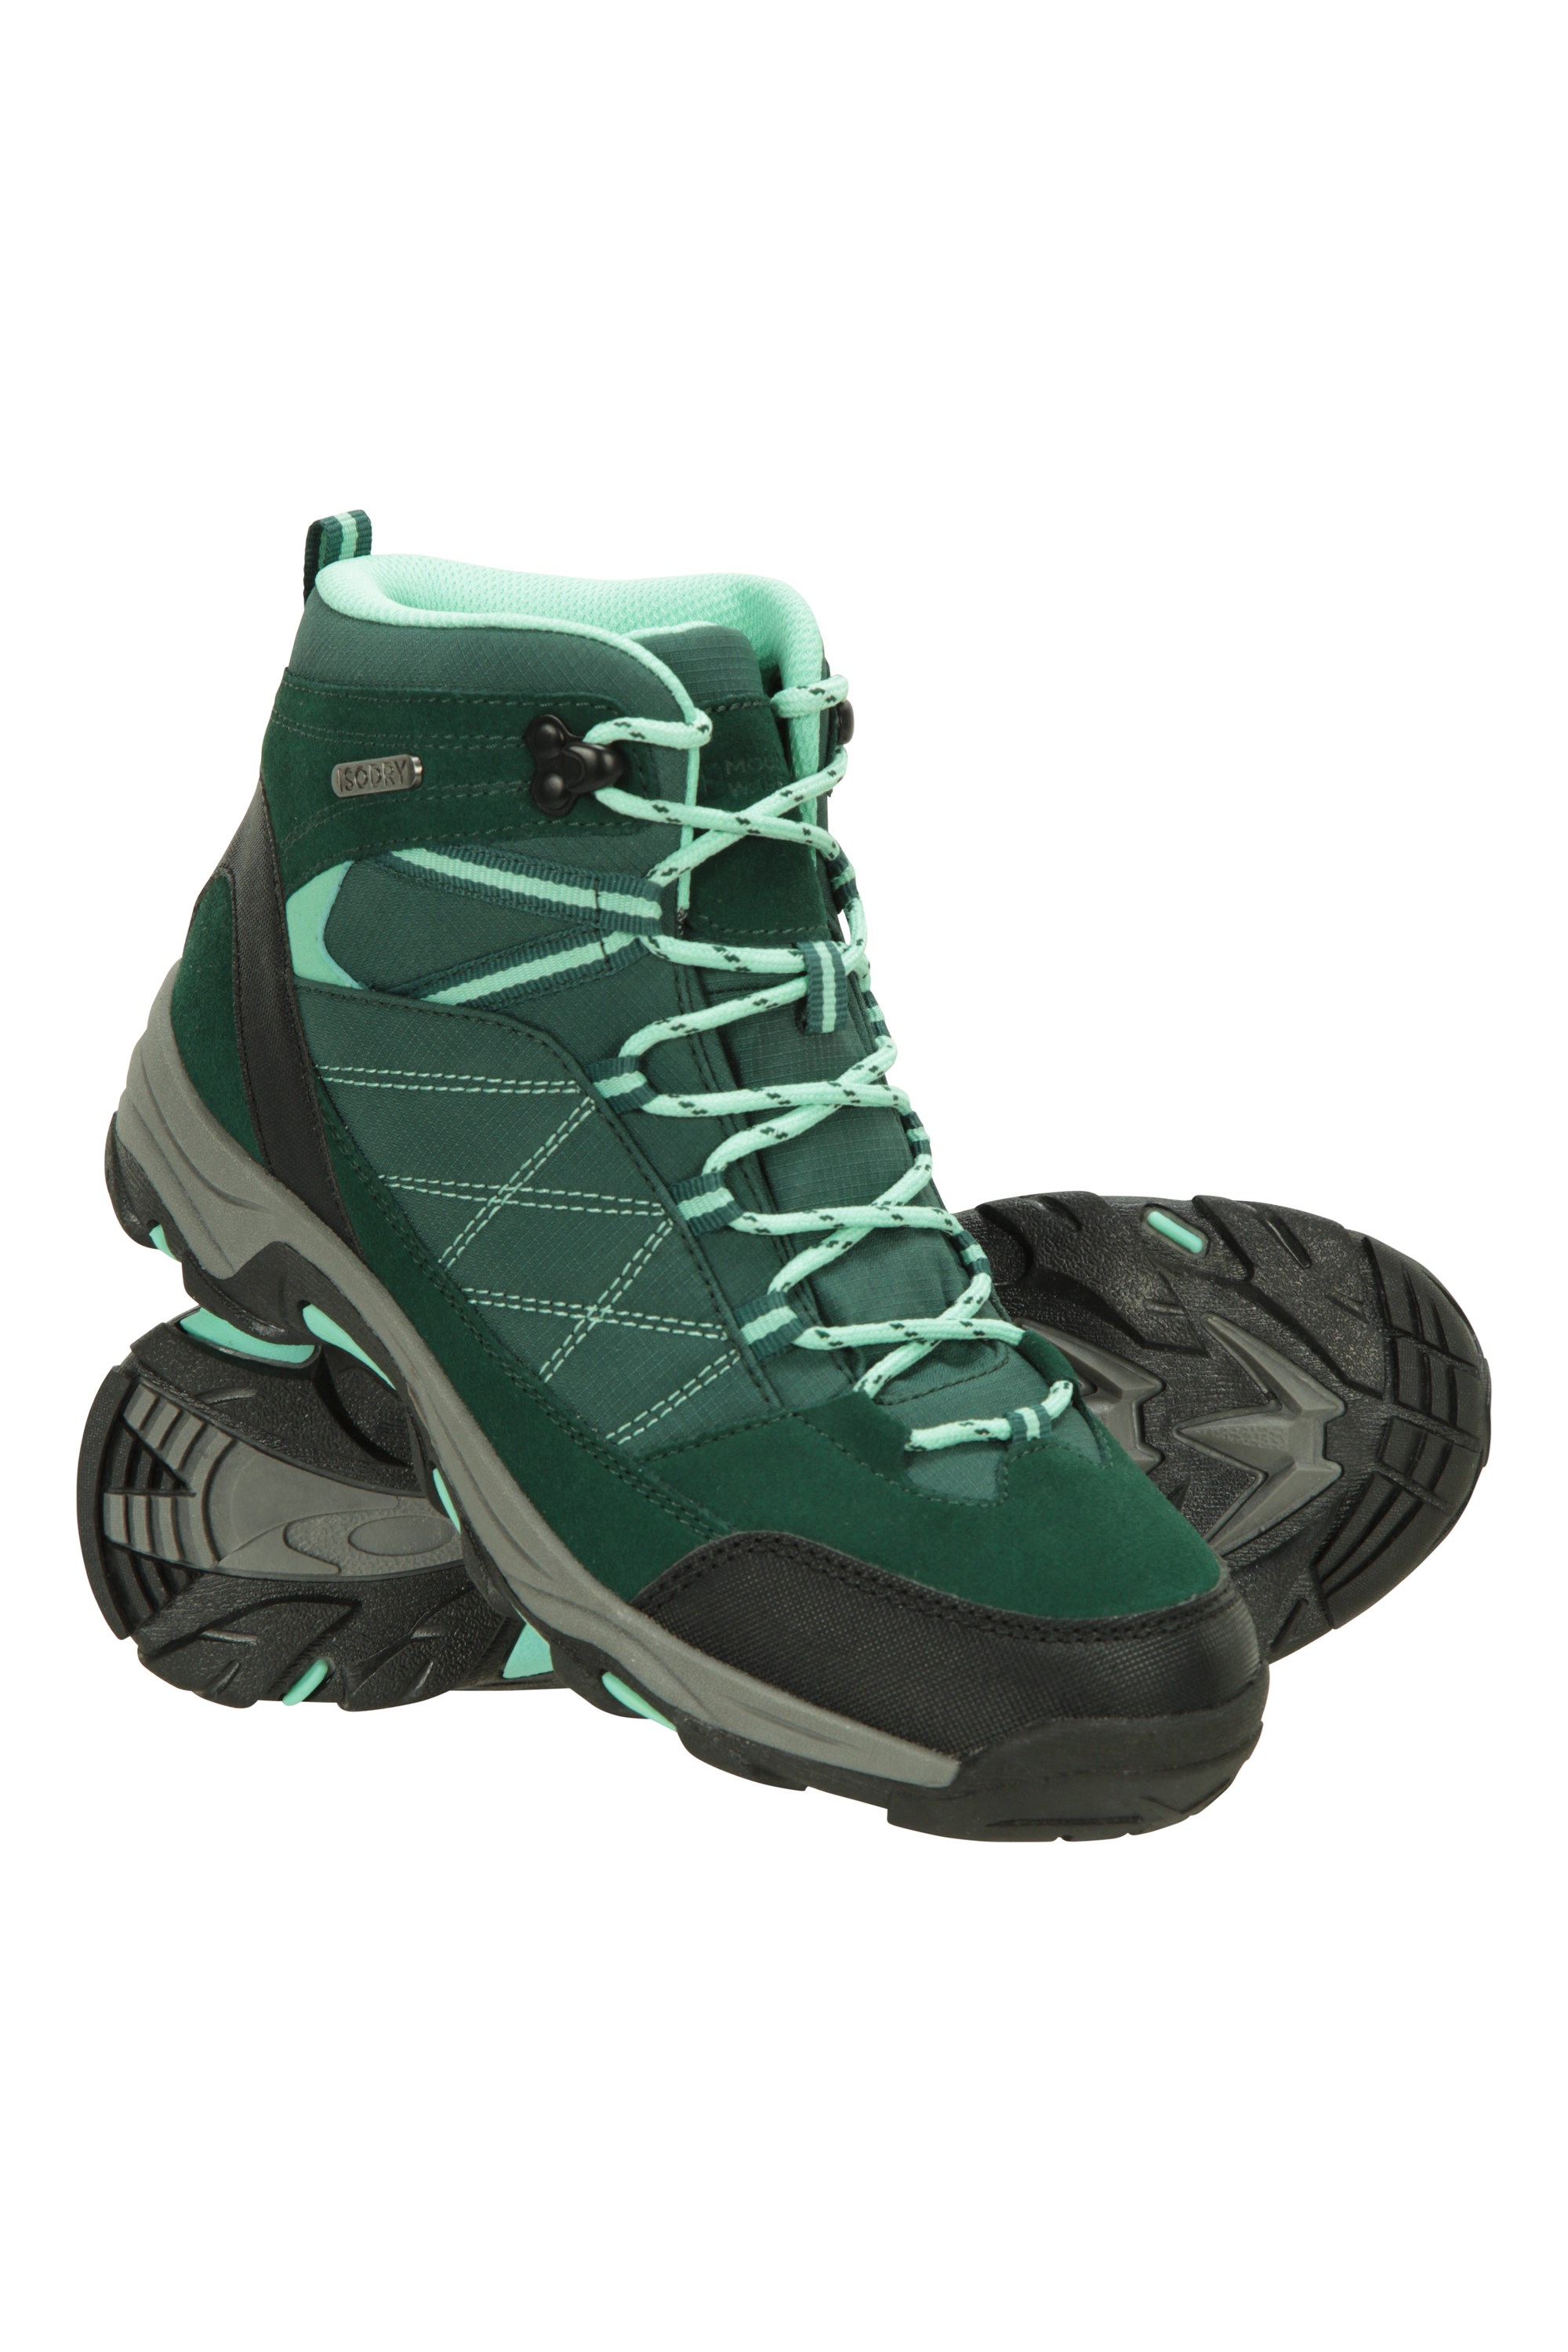 Rapid Womens Waterproof Boots - Green